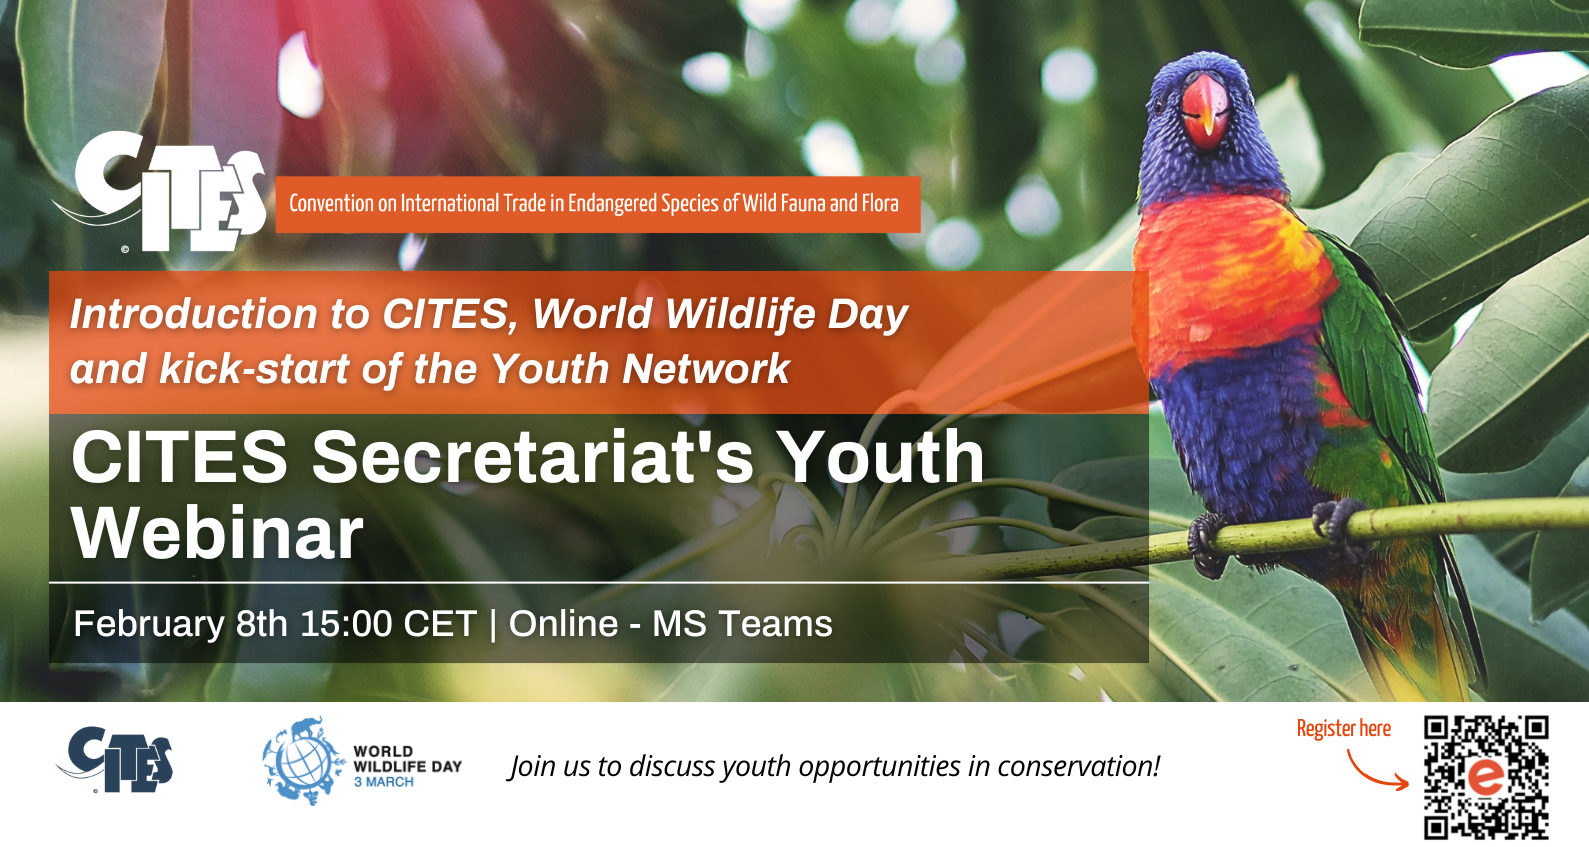 CITES Webinar on Youth